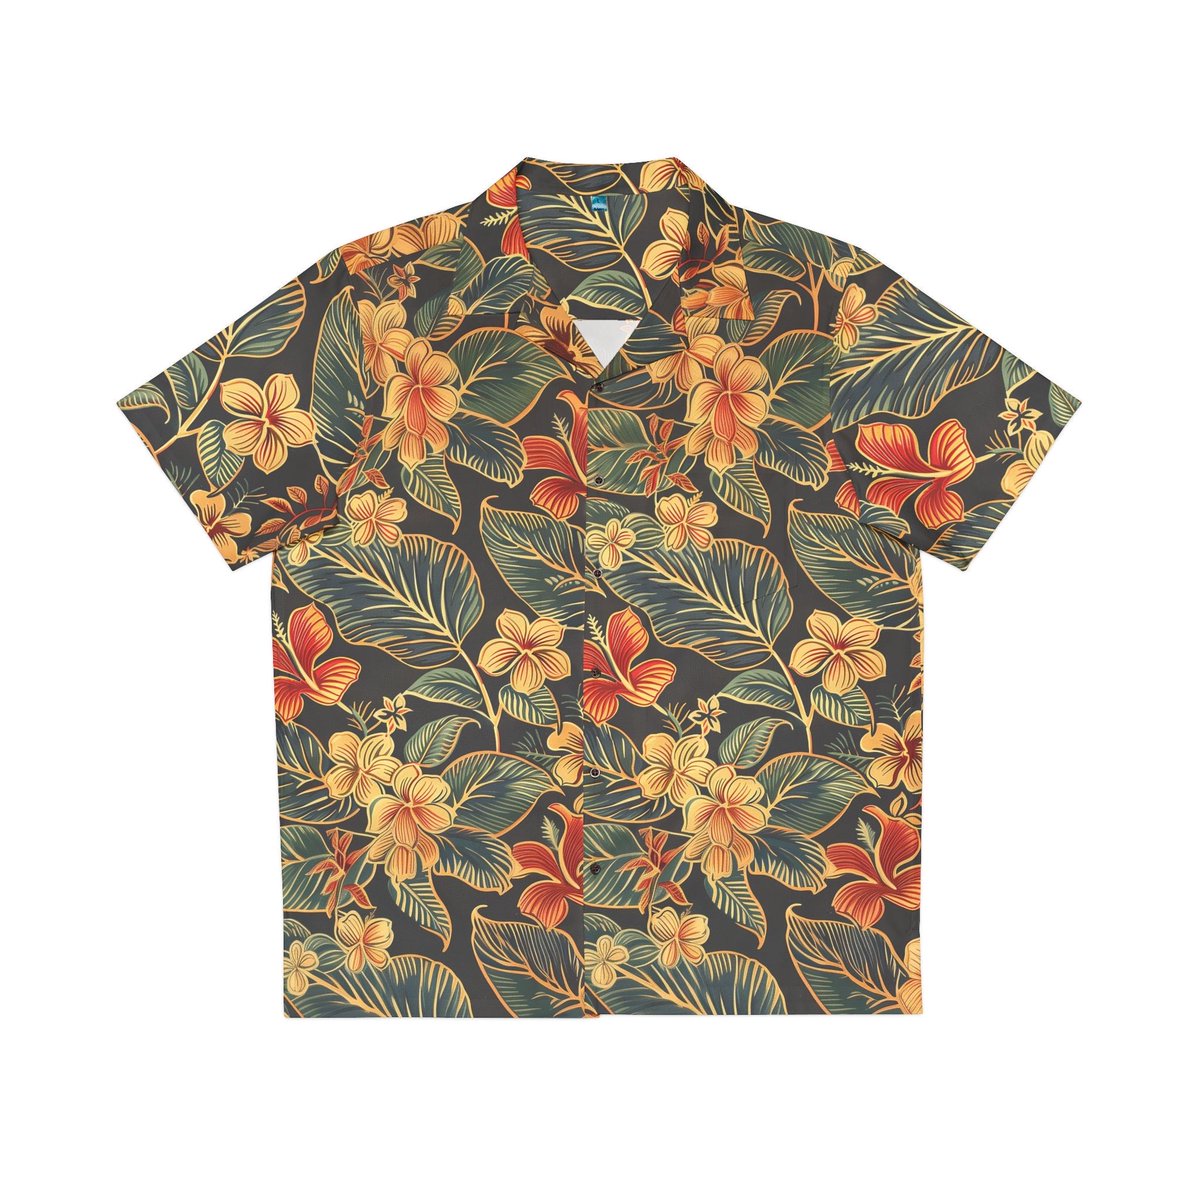 Authentic Vintage Hawaiian Shirt Pattern. Stock up for Summer. #summer #summerstyle #hawaiian #hawaiianshirt #luau #vintage #fashion #vintagestyle